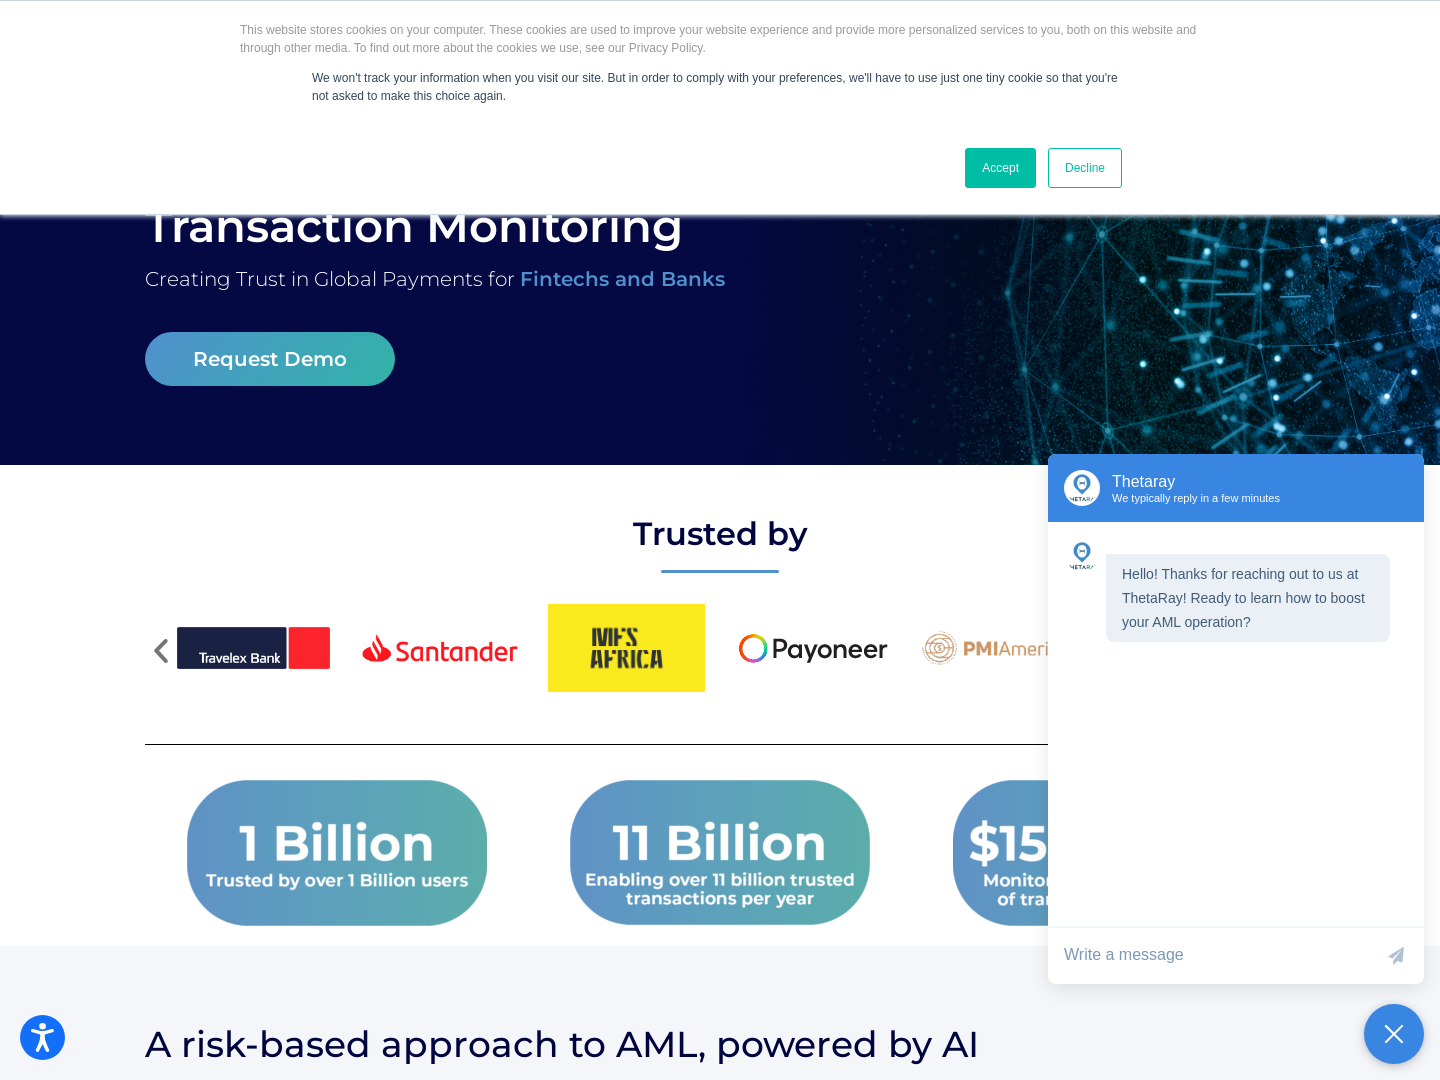 "ThetaRay Raises $57M for AI-Powered Transaction Monitoring Solution"